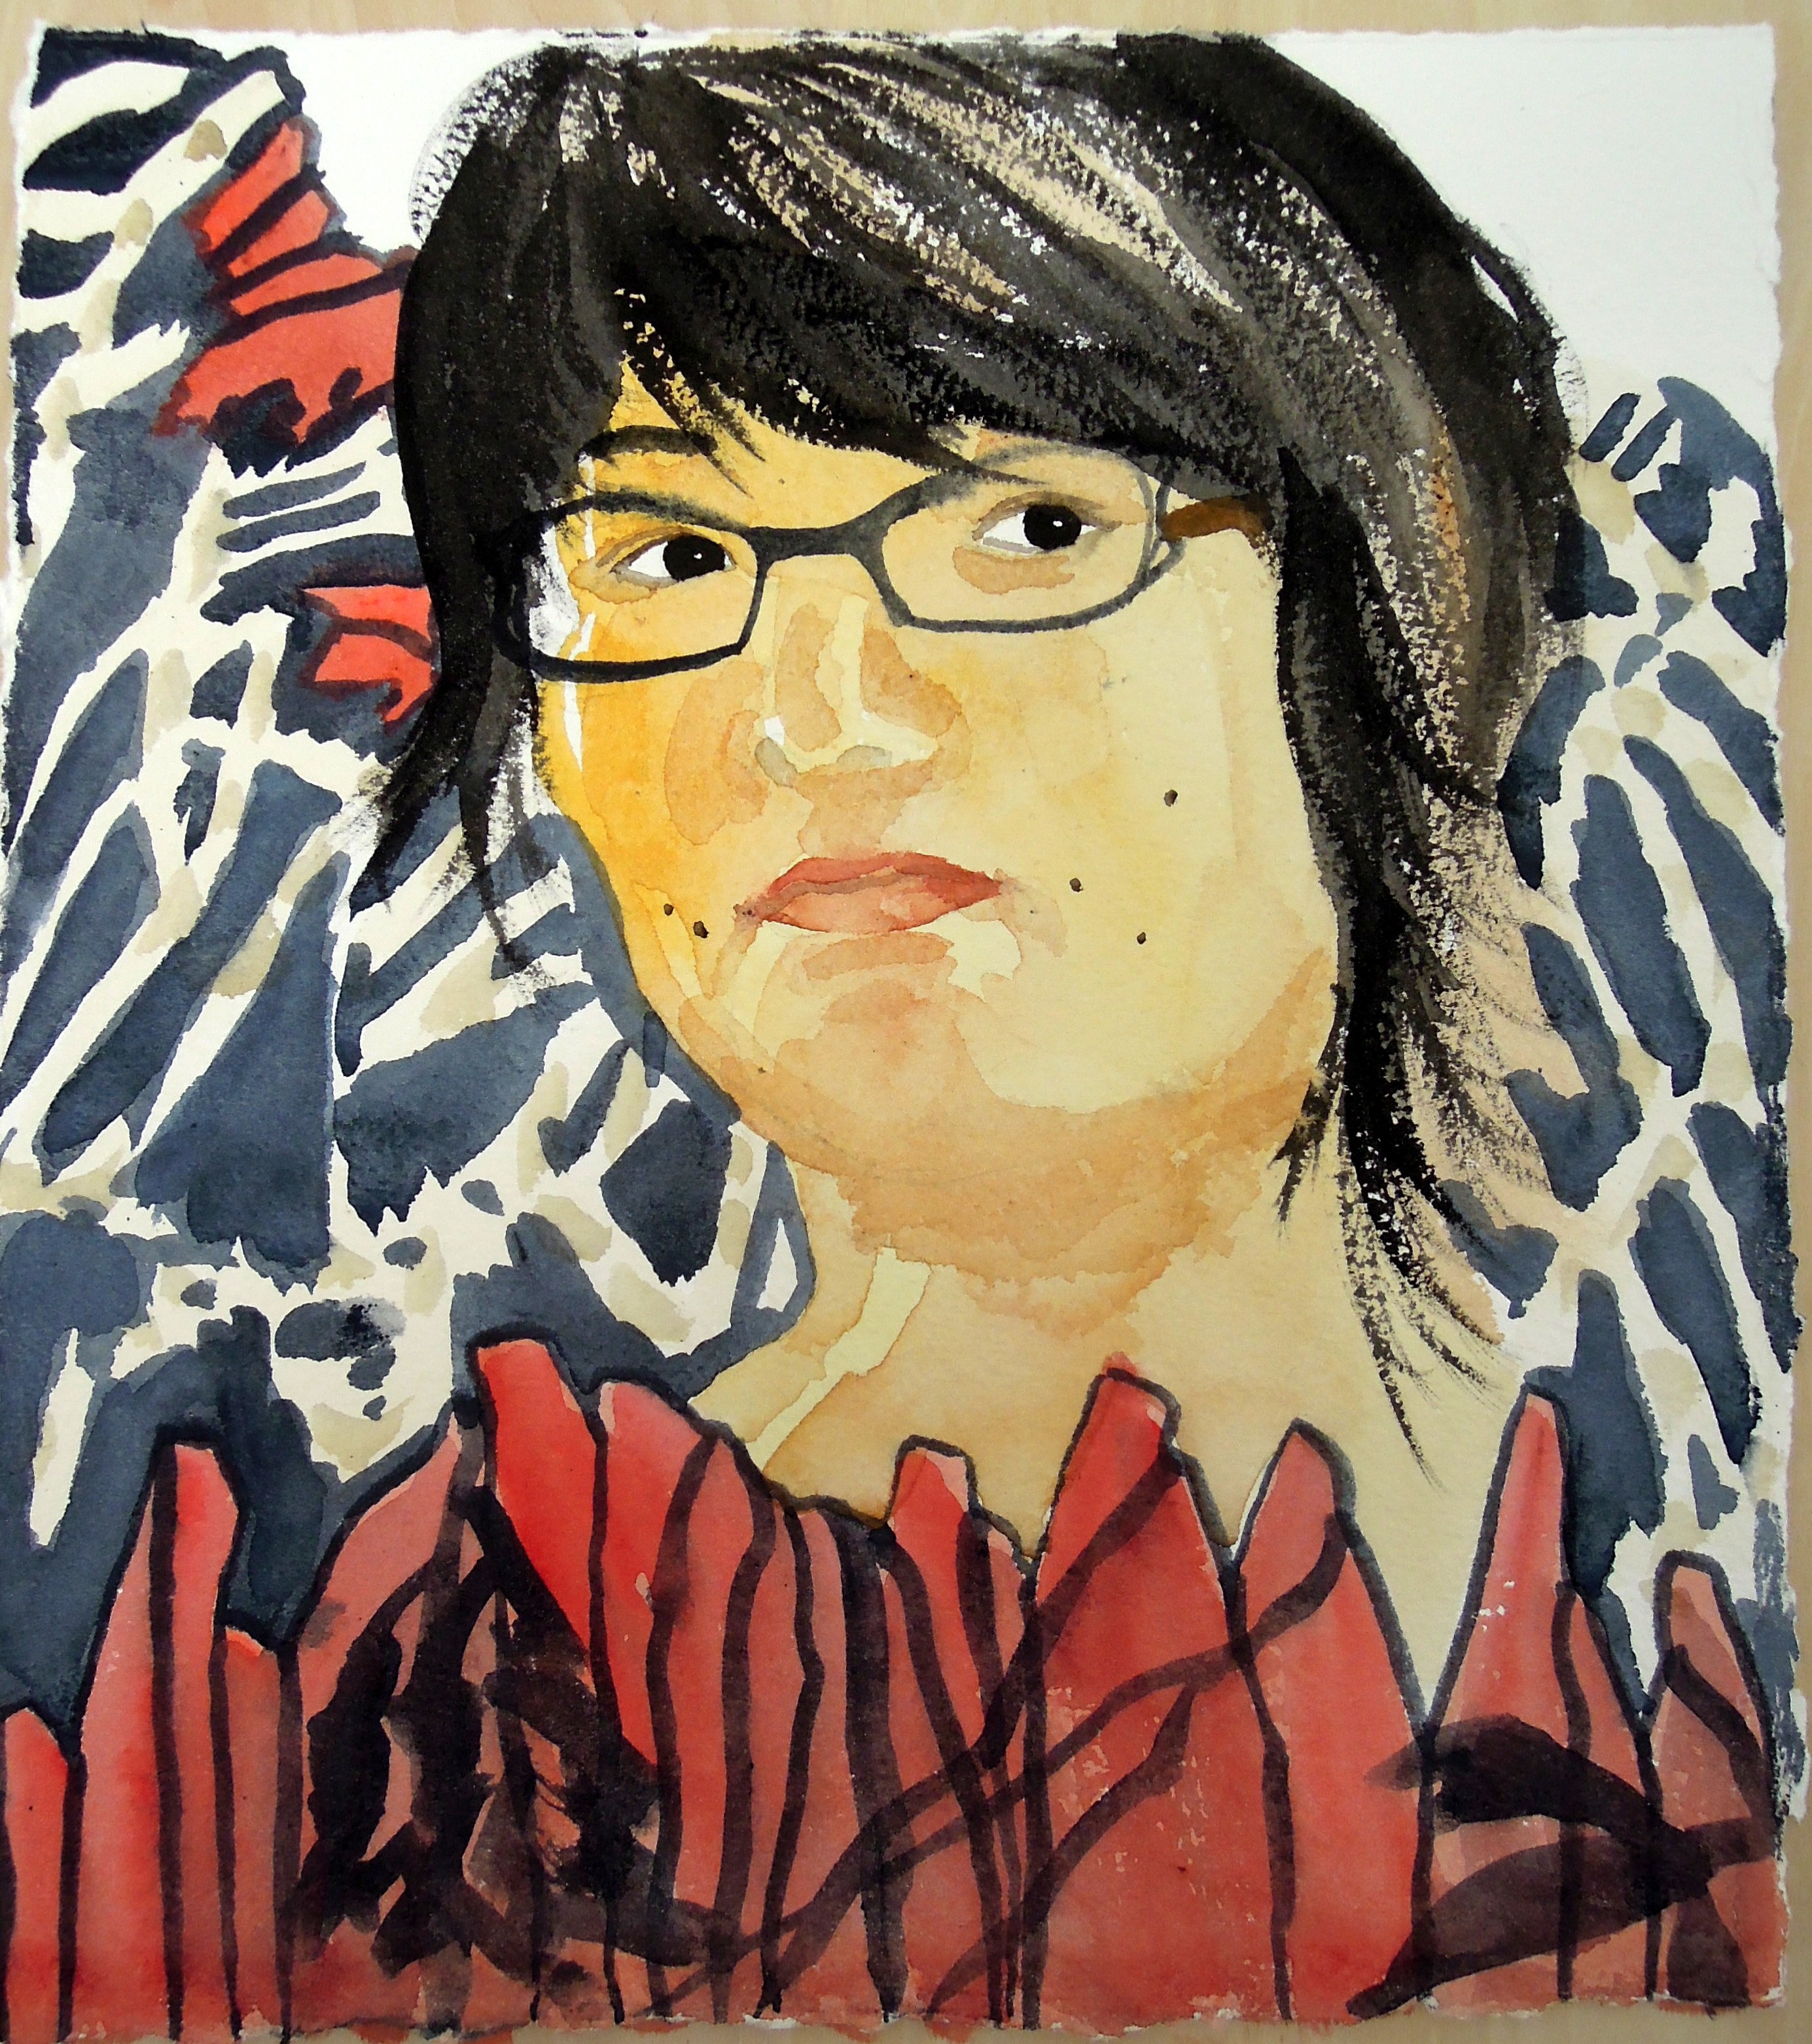 Self-portrait in watercolor, 2014